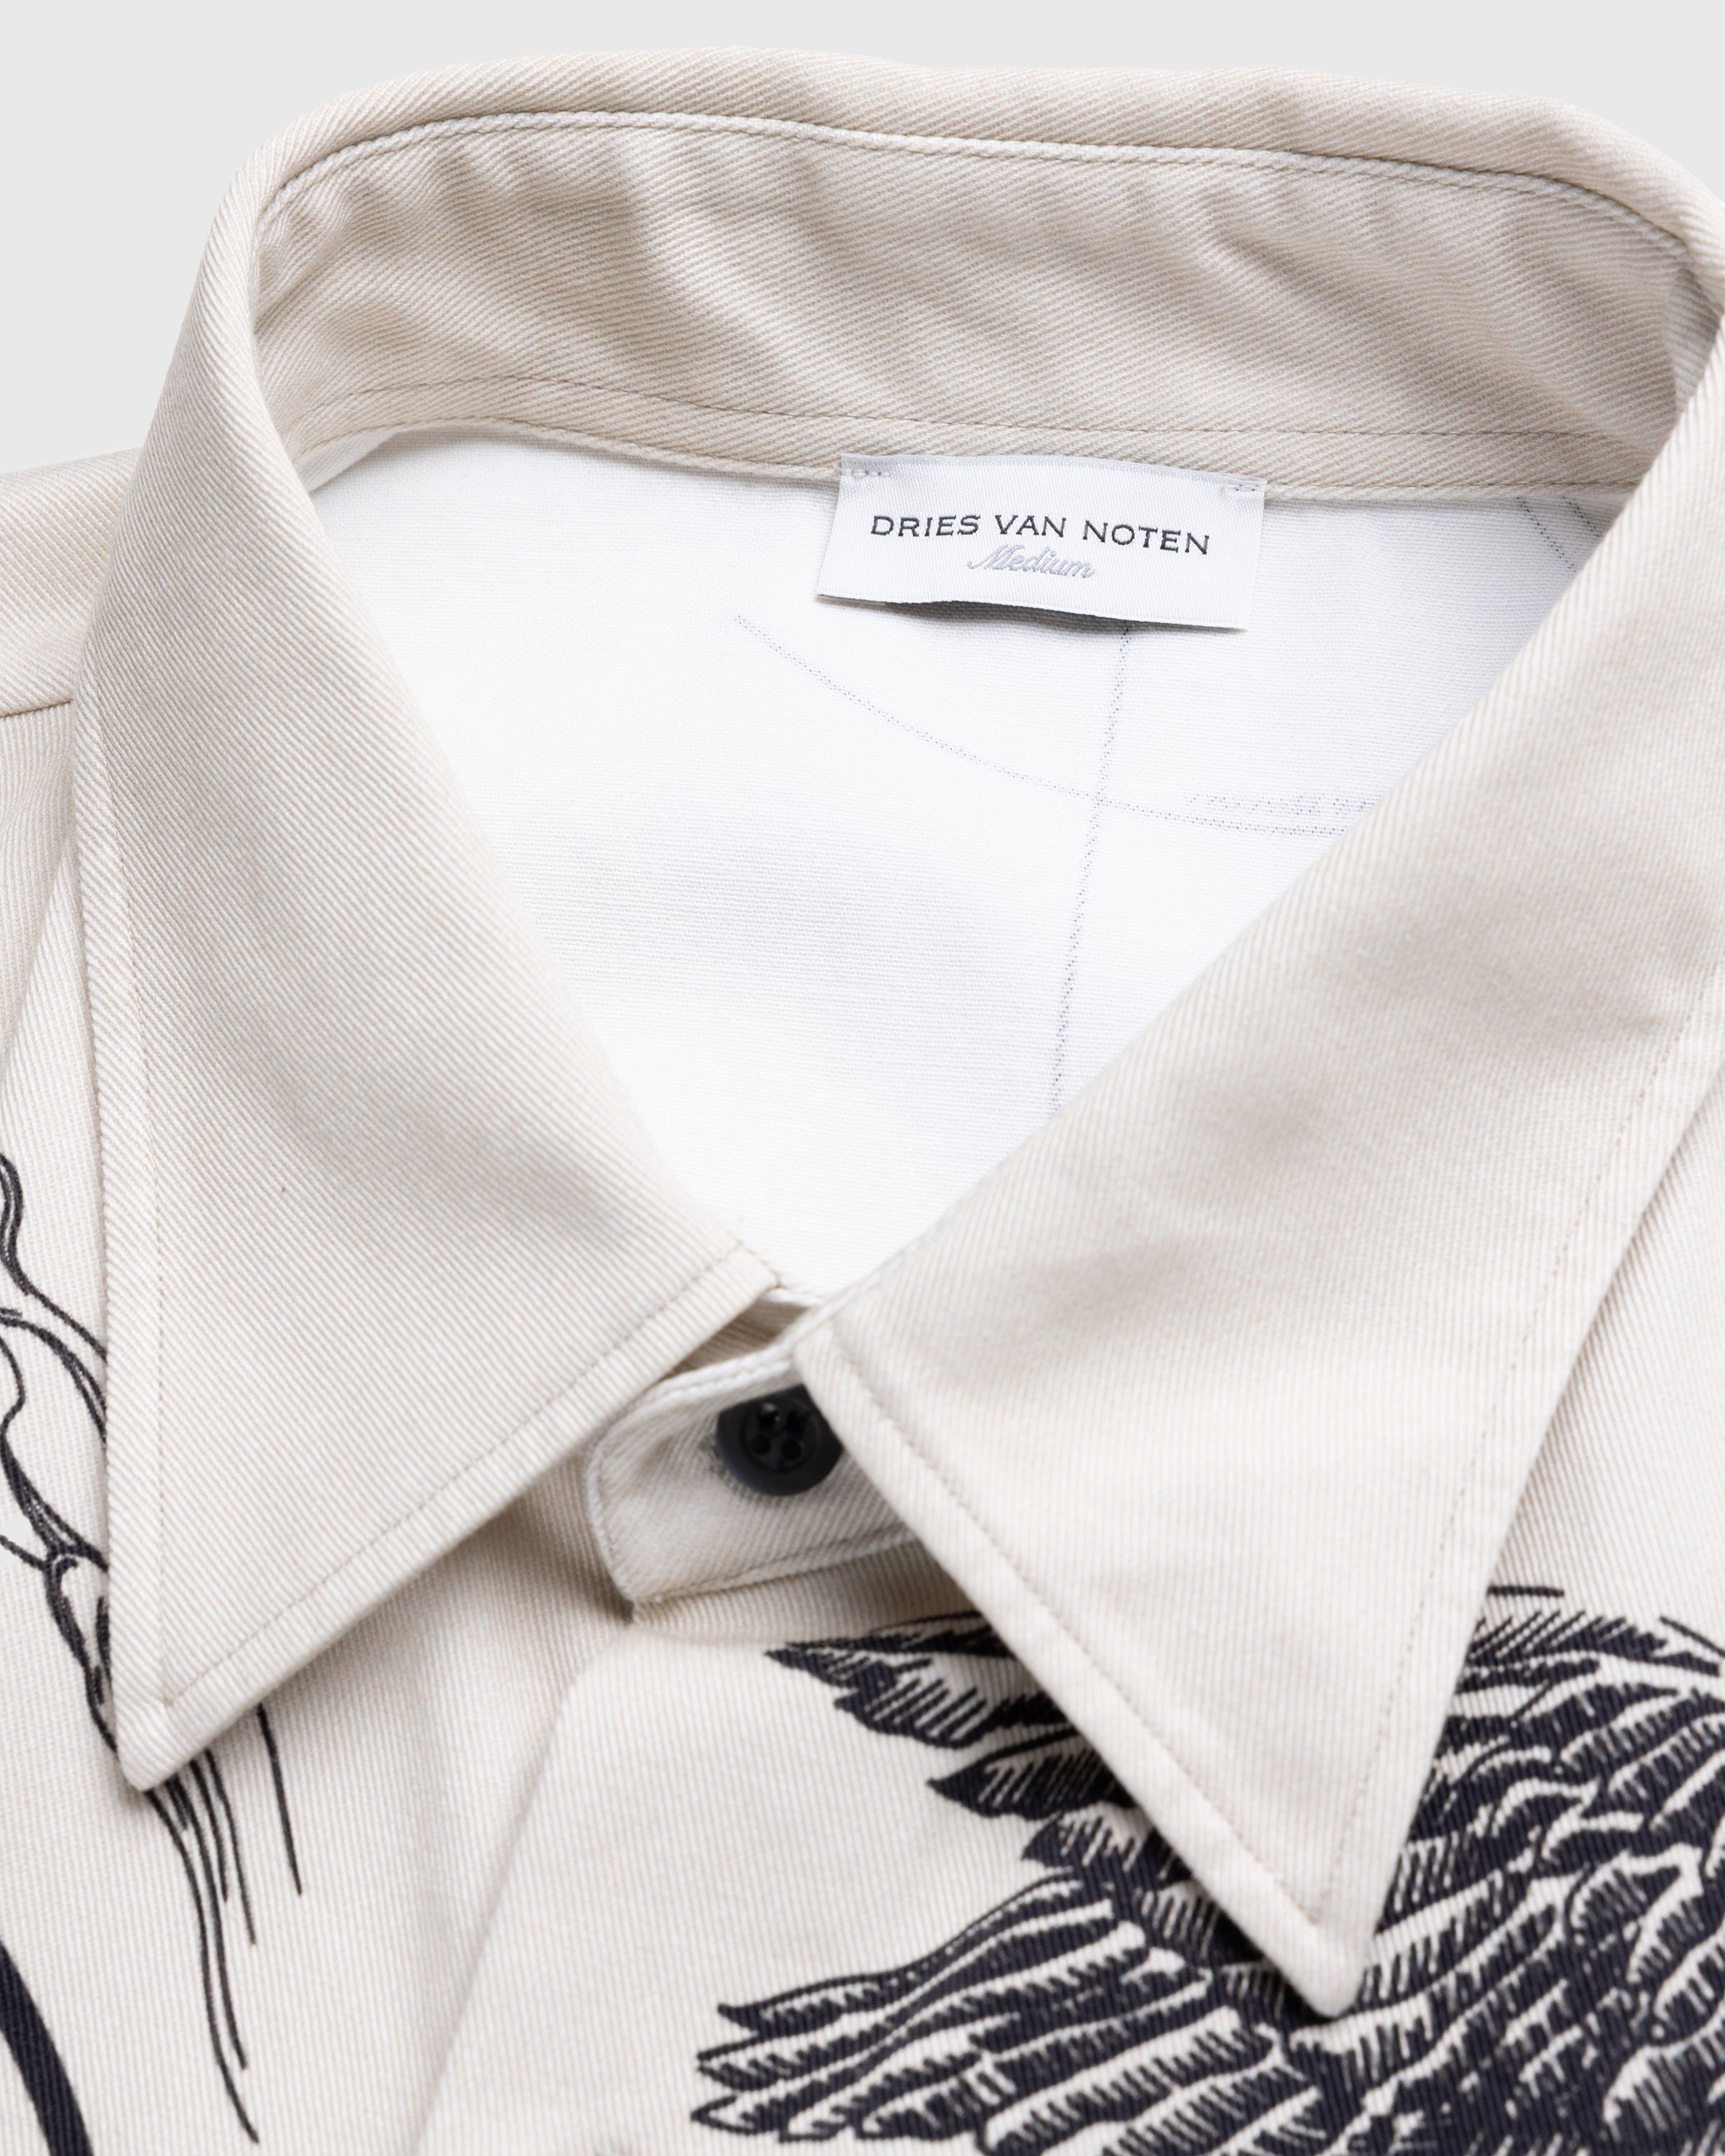 Dries van Noten - Cassidye Shirt Cement - Clothing - Grey - Image 6